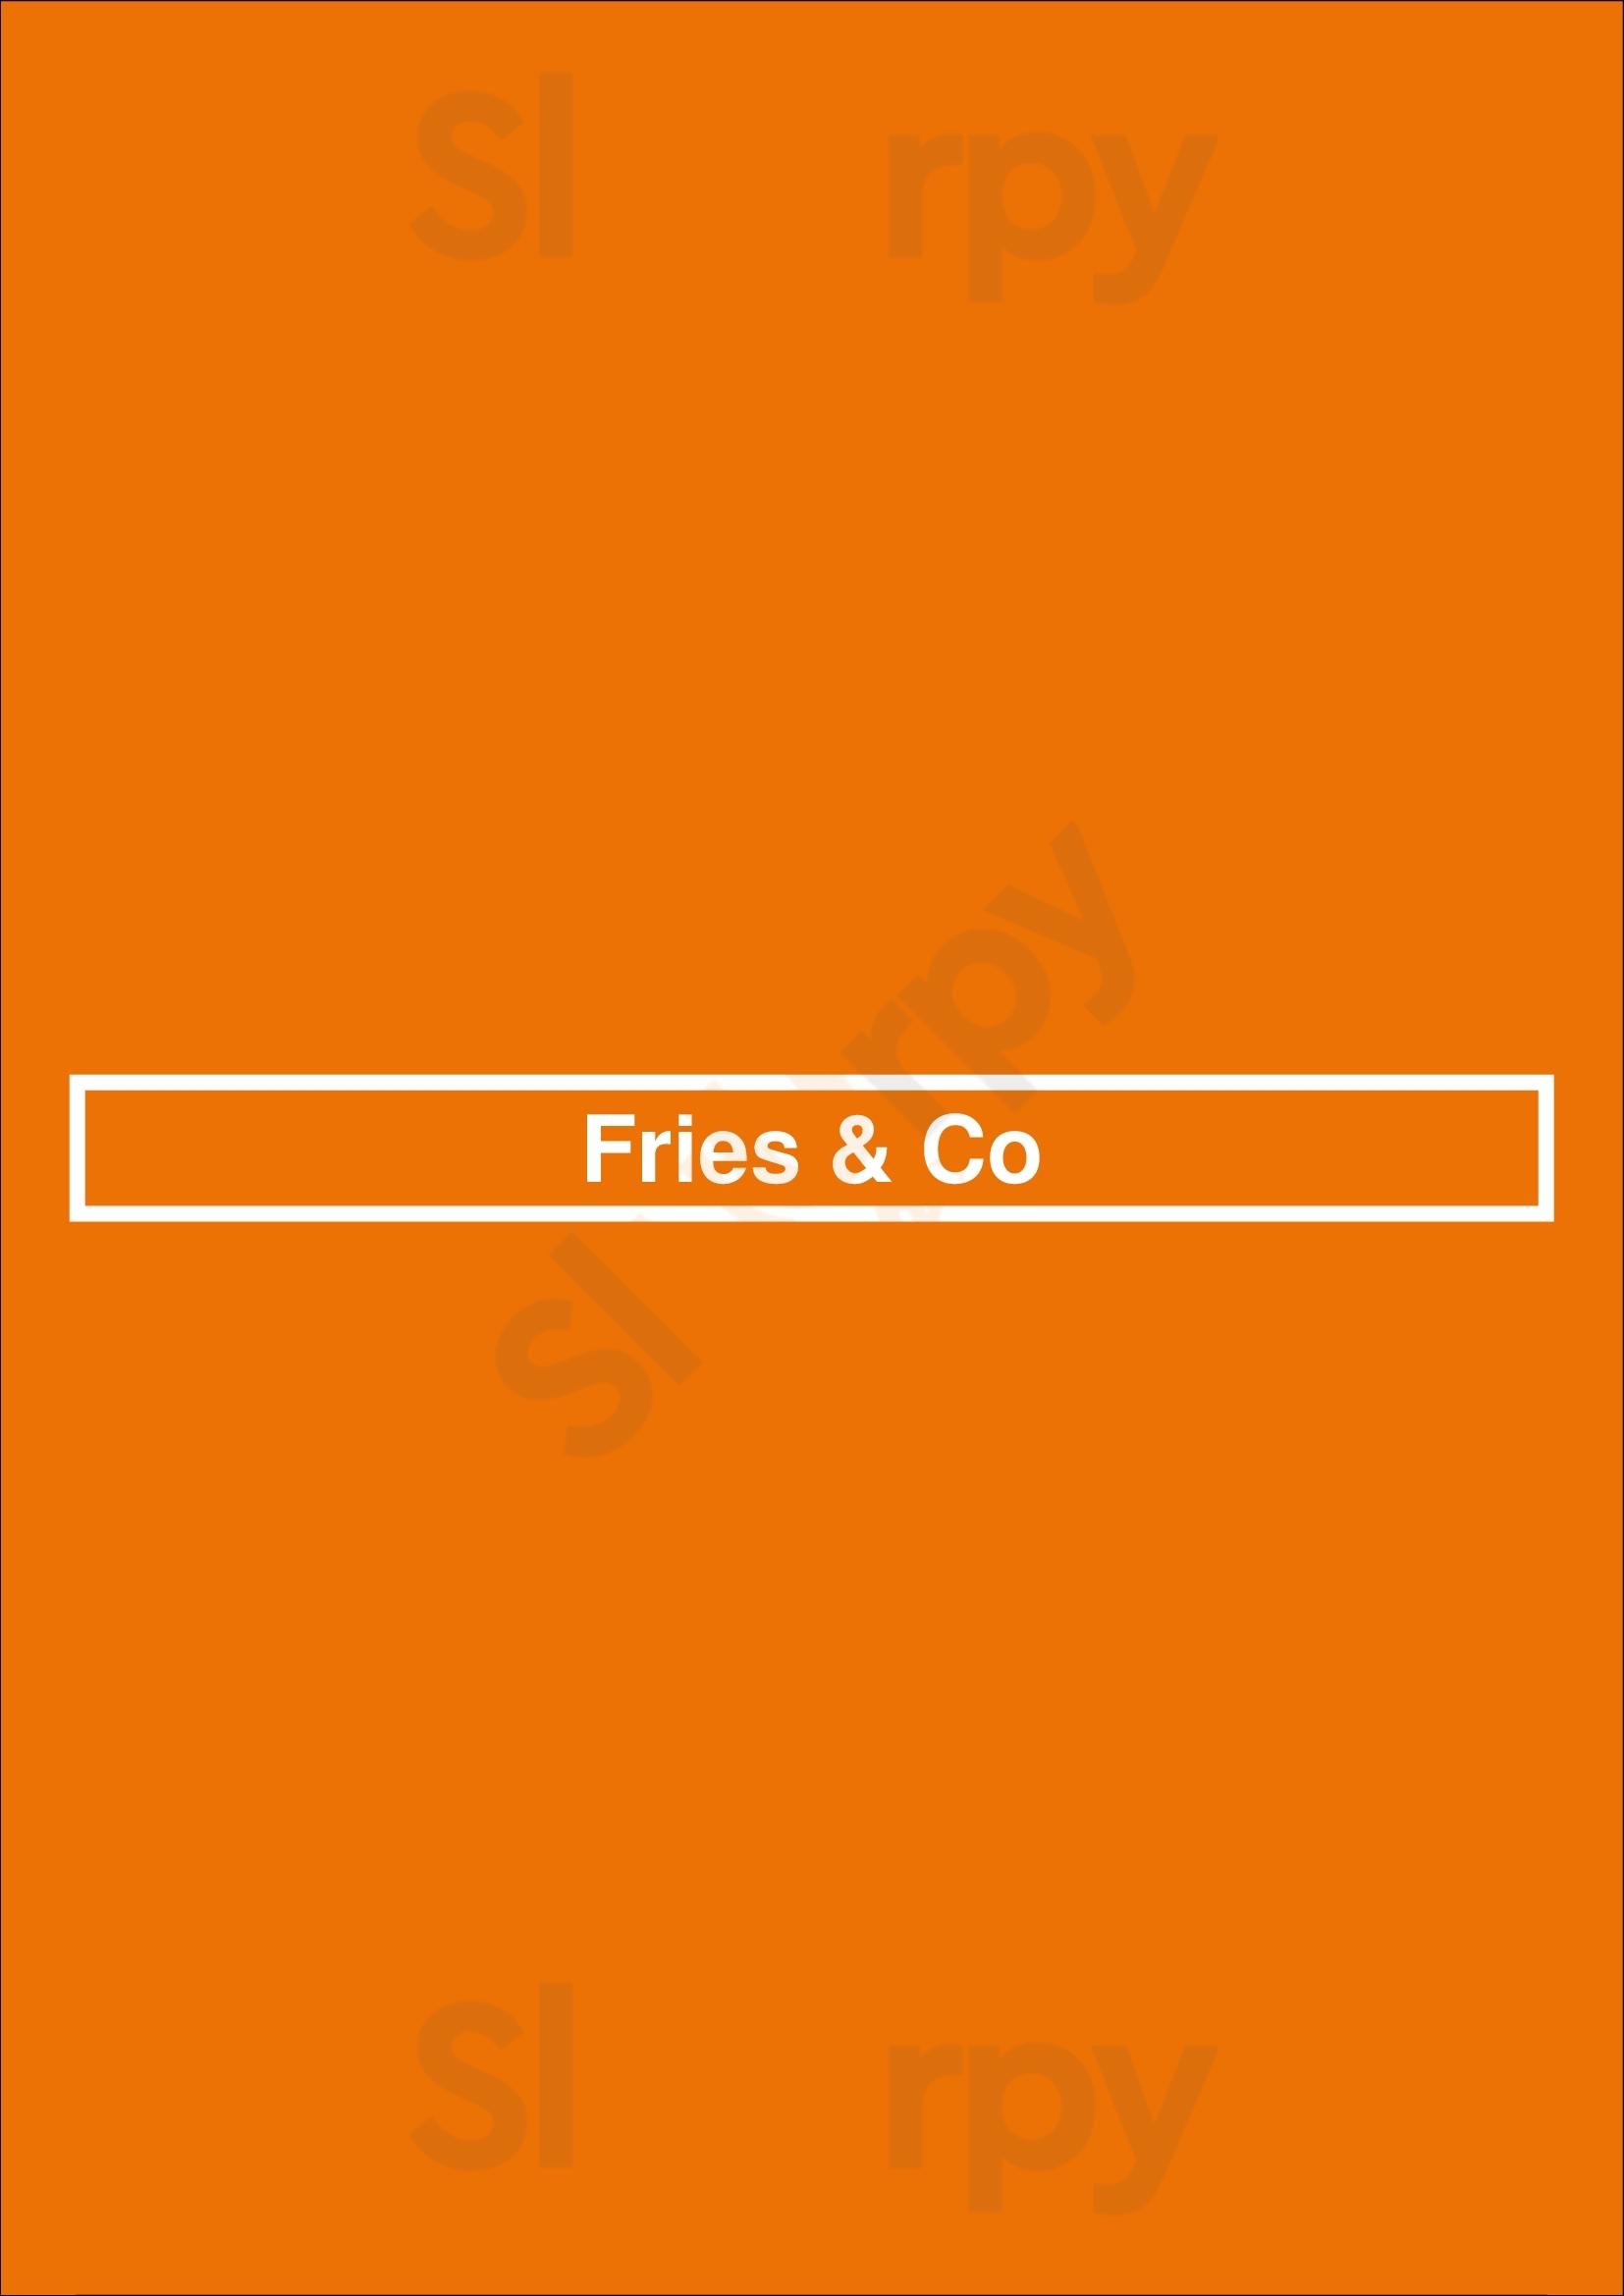 Fries & Co Halifax Menu - 1